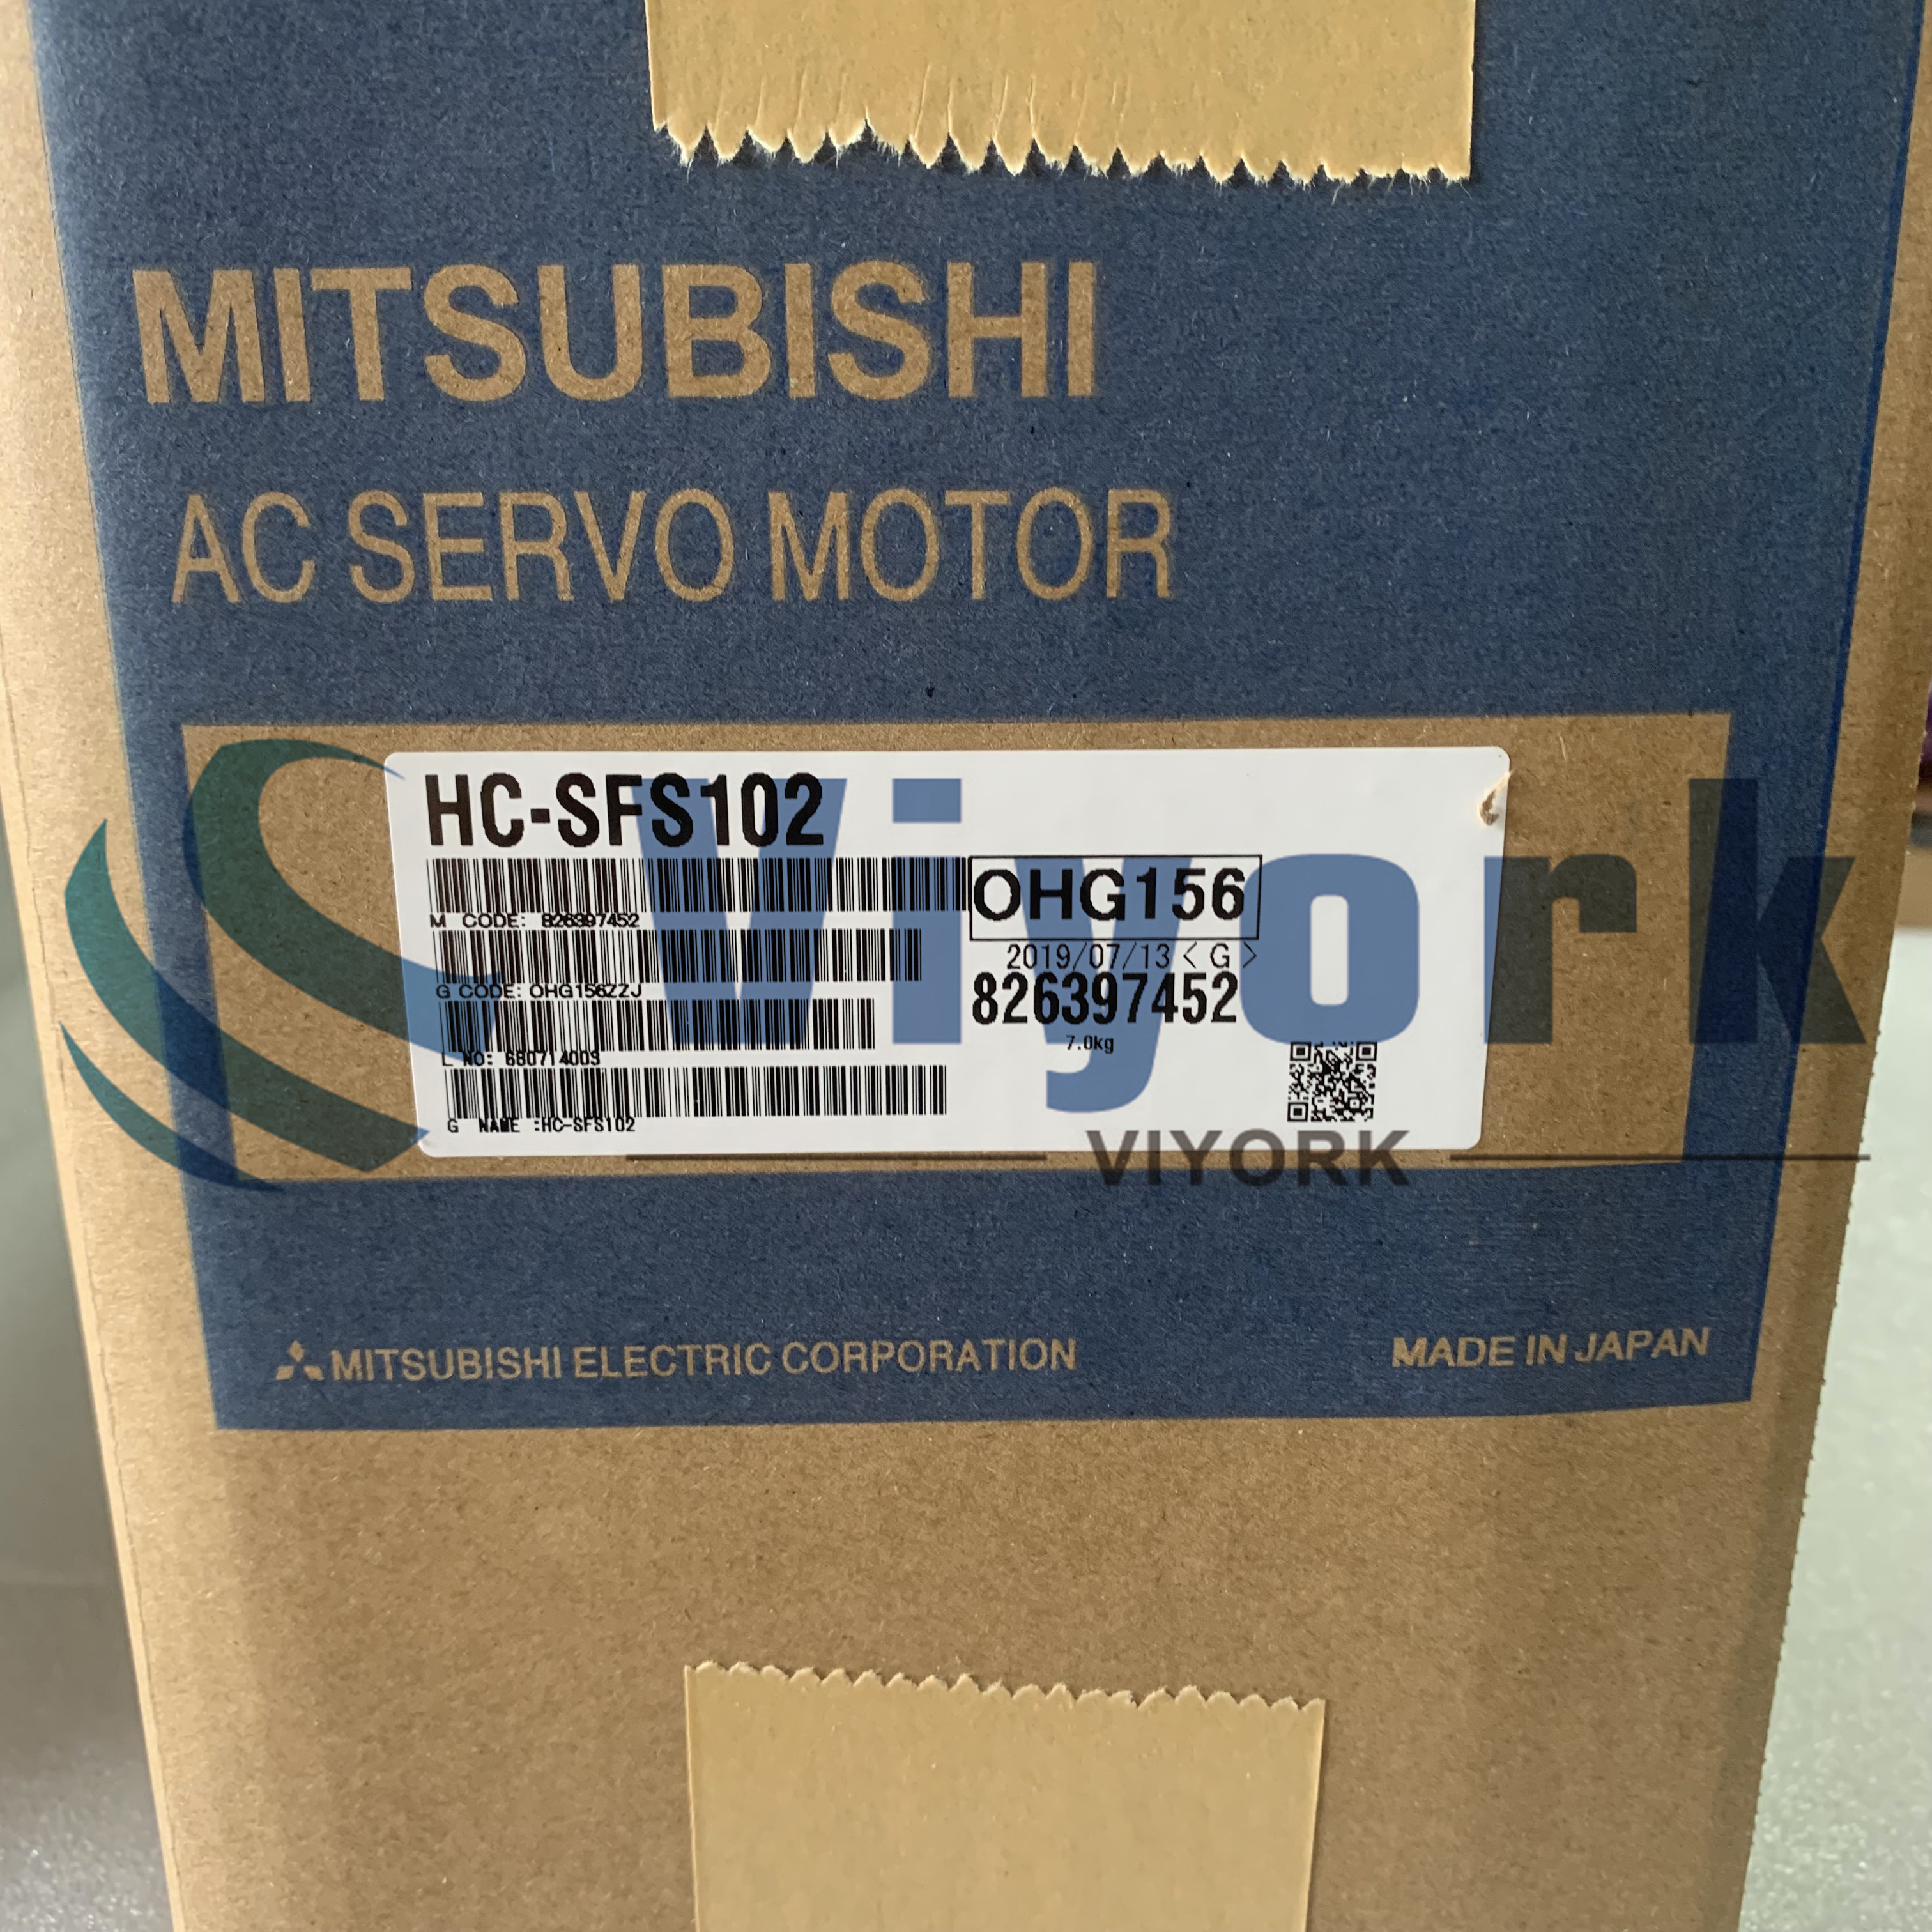 Mitsubishi HC-SFS102 AC SERVO MOTOR 123V 6.0A 1KW 2000R/MIN NEW